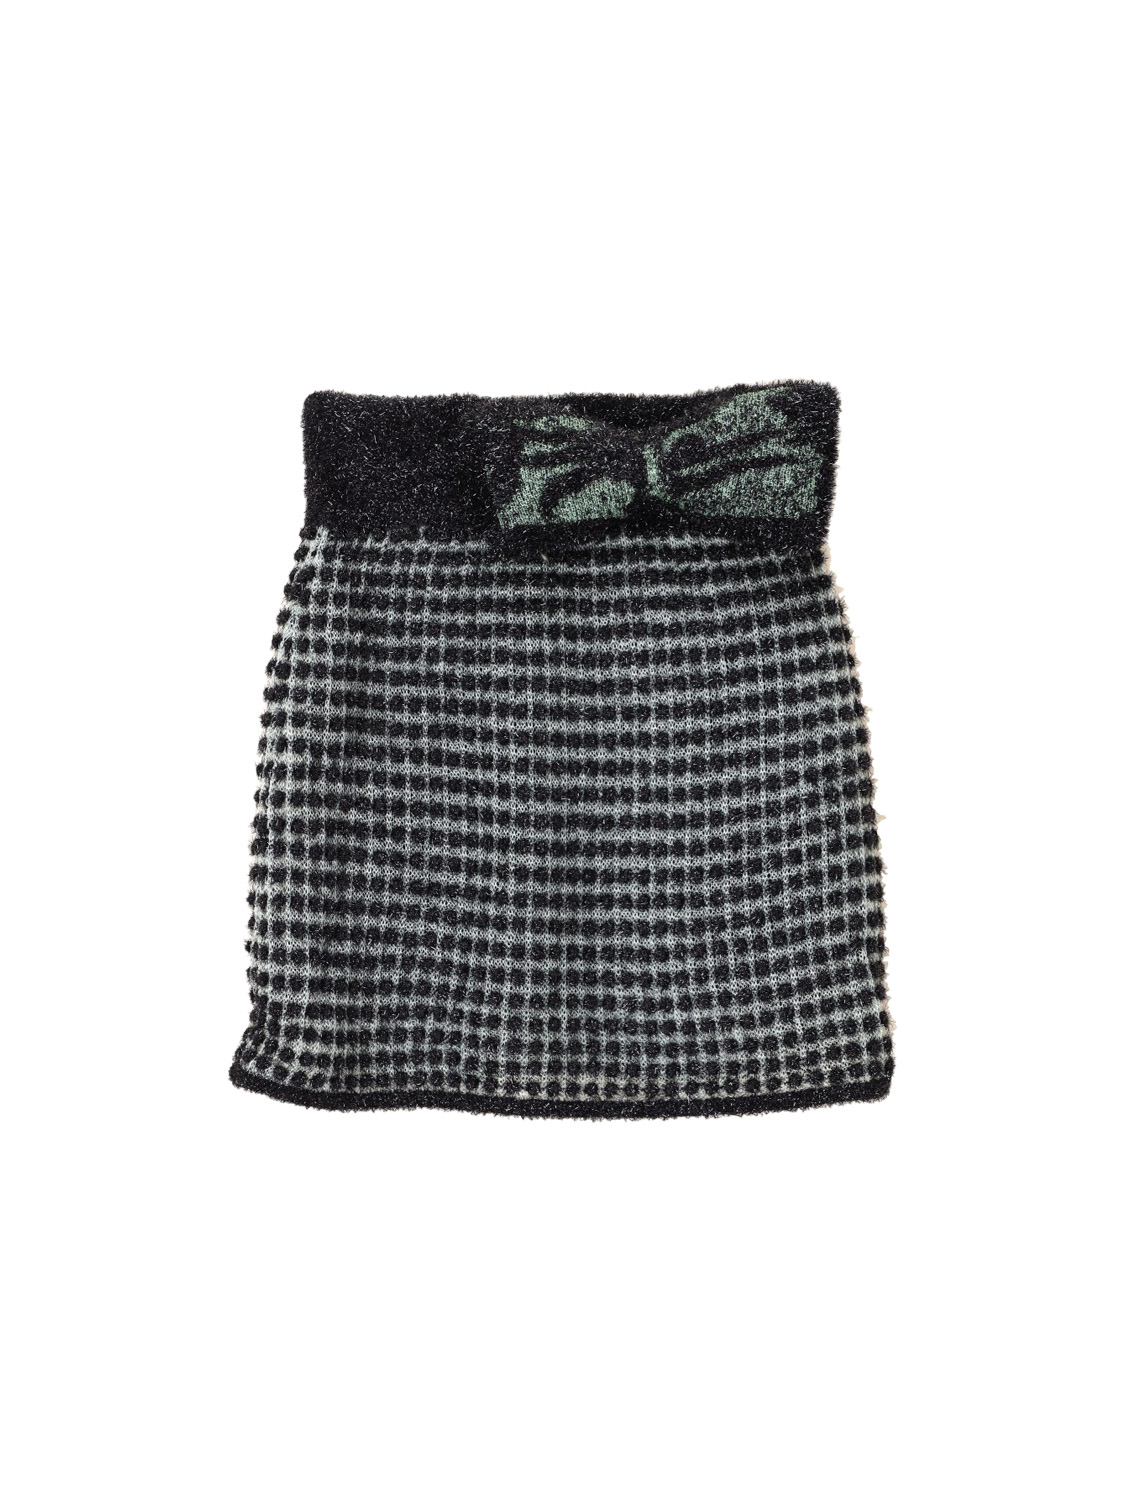 Cassia – knitwear mini skirt with lurex 